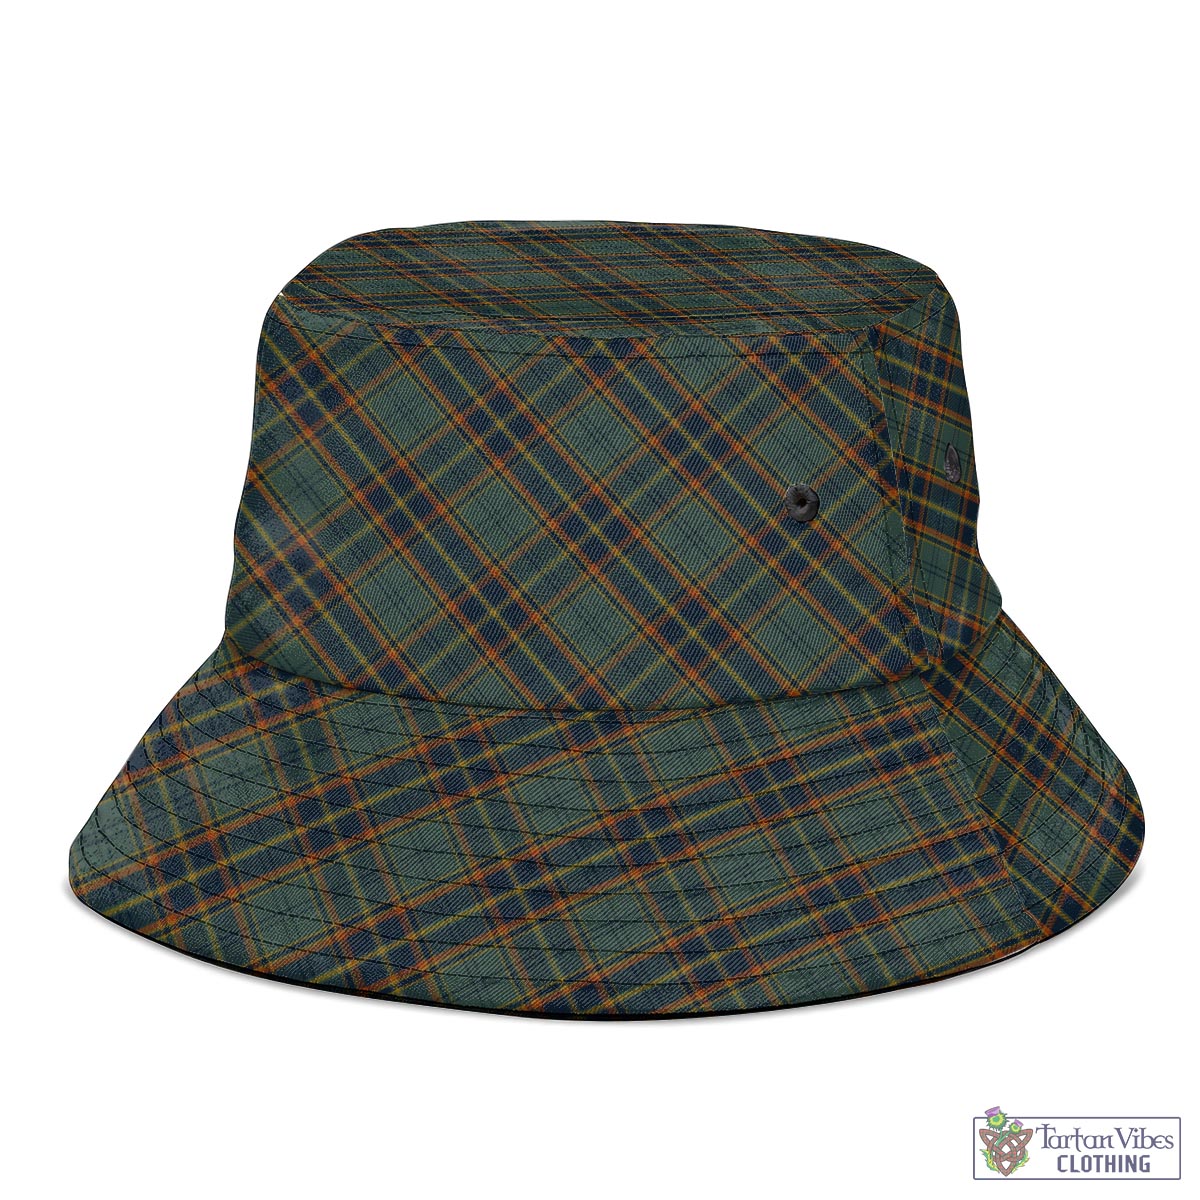 Tartan Vibes Clothing Antrim County Ireland Tartan Bucket Hat